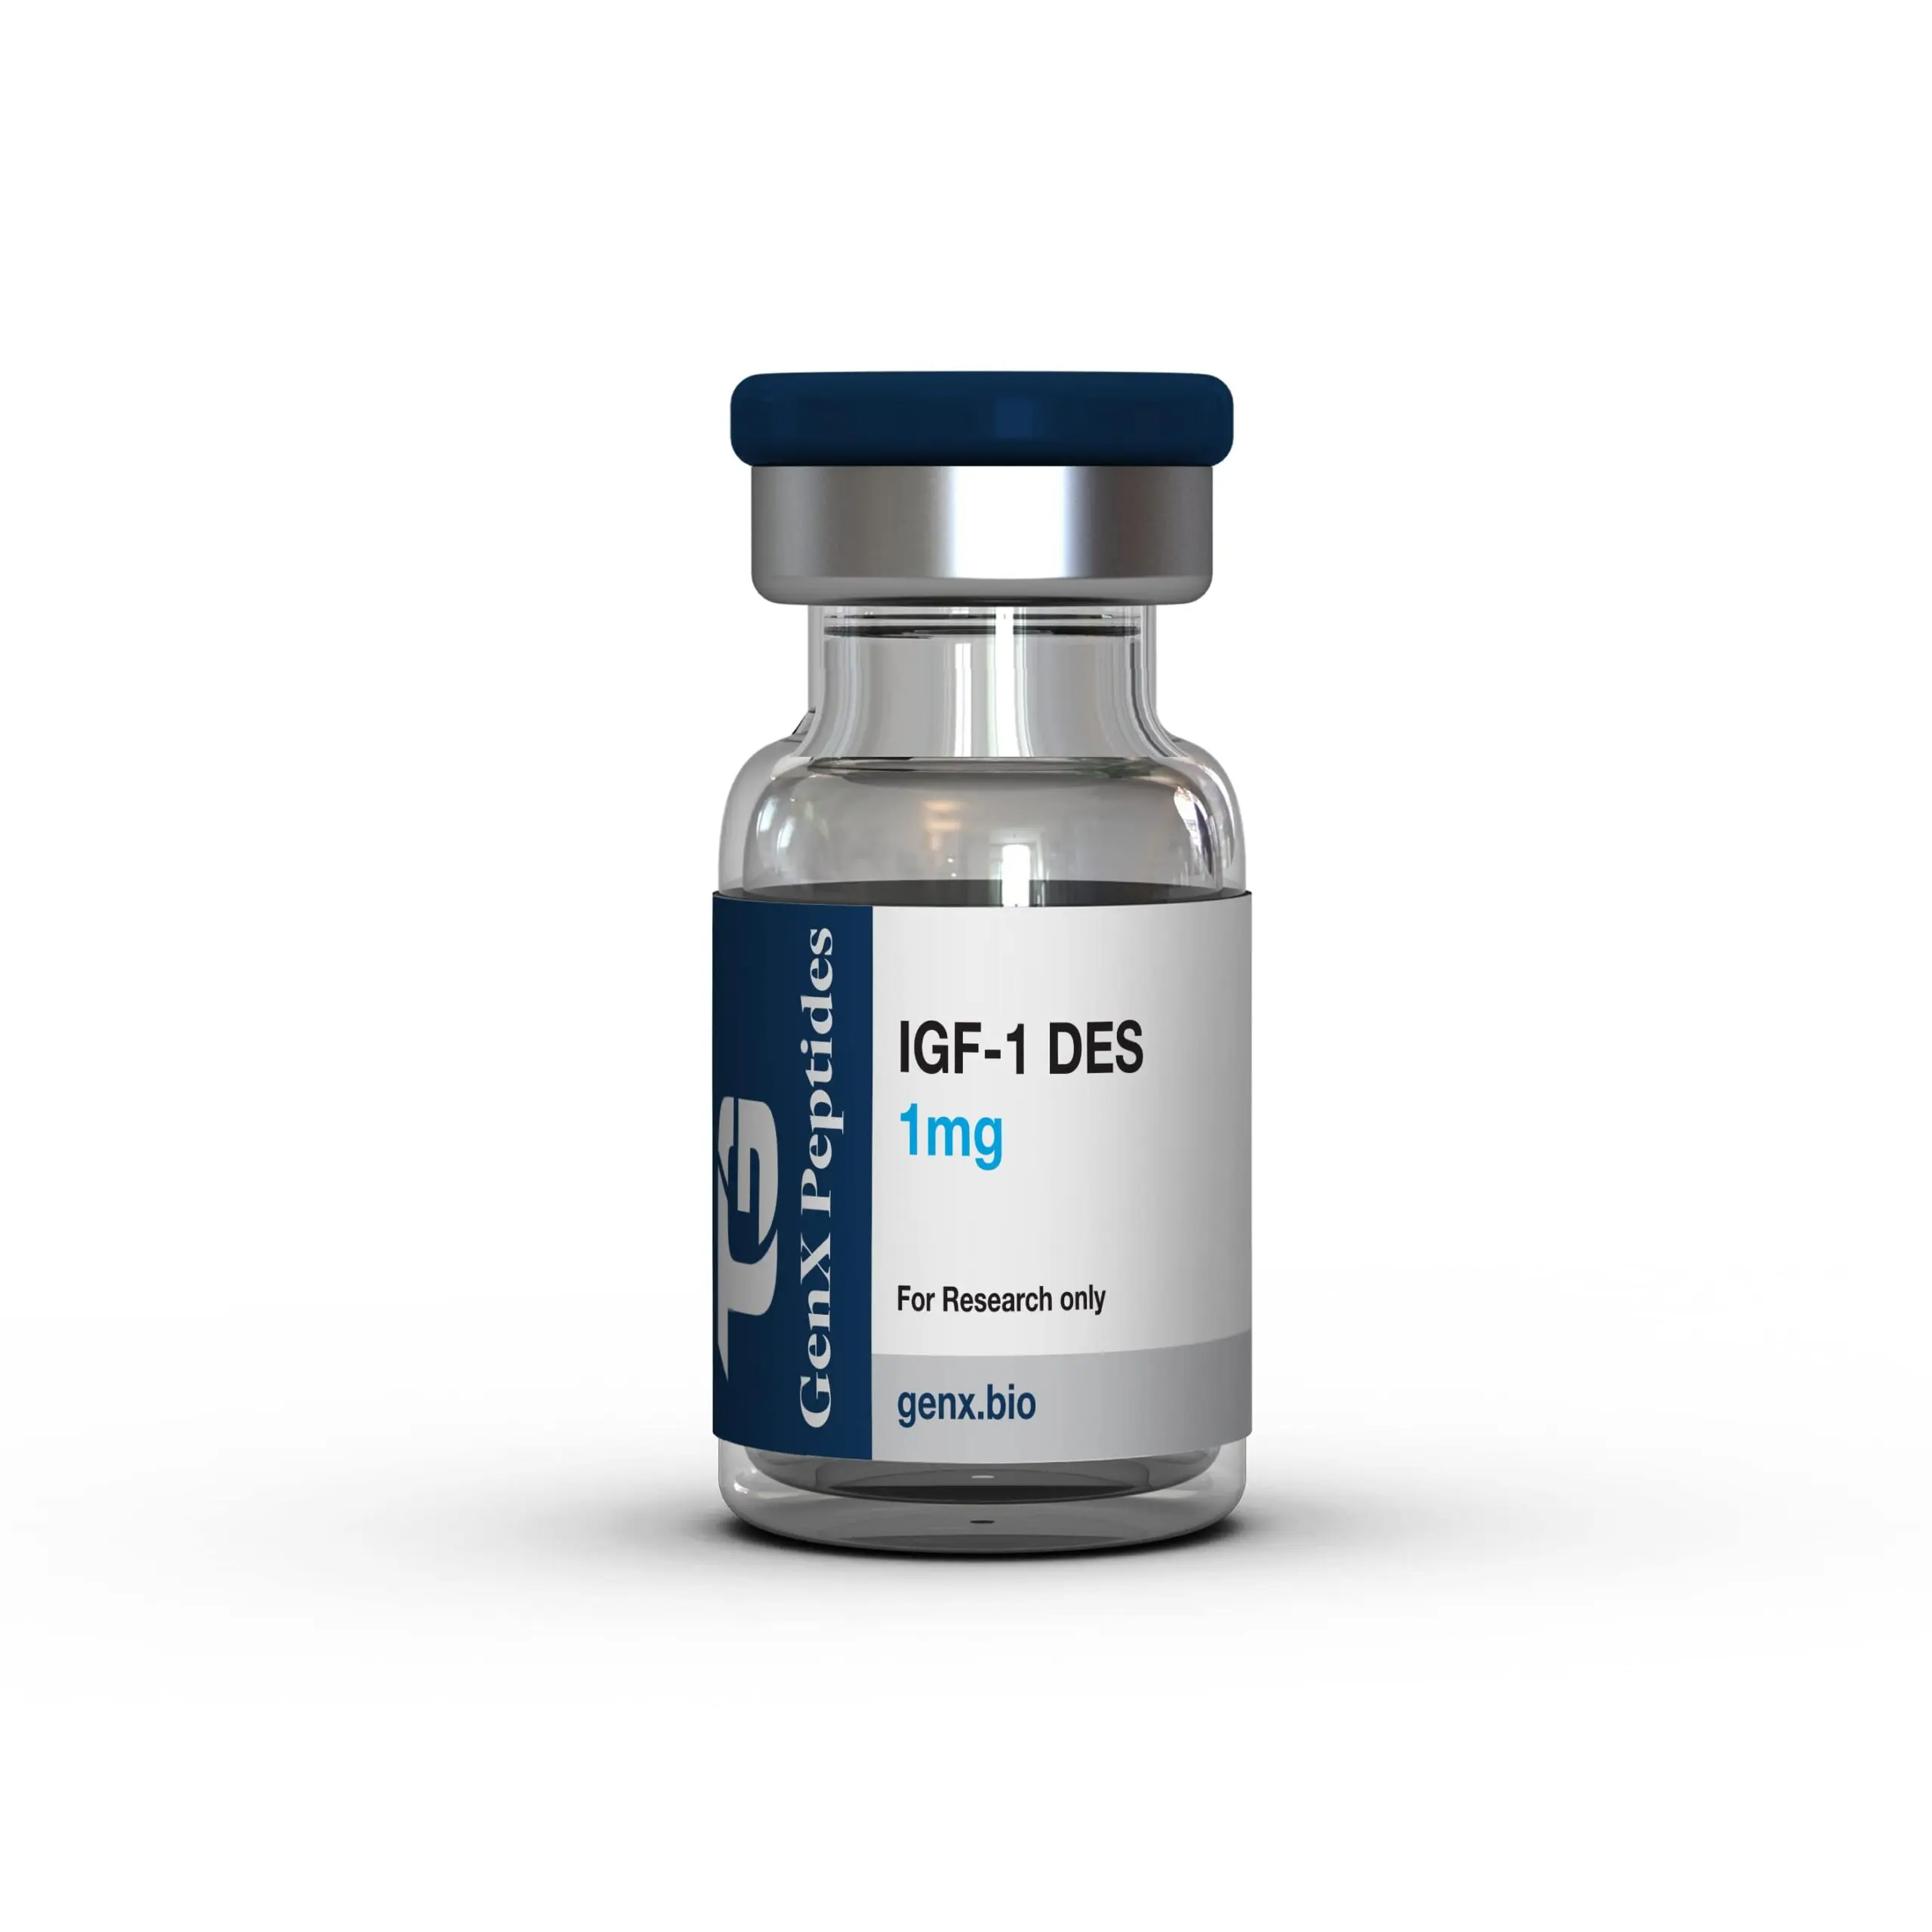 IGF 1 DES Peptide